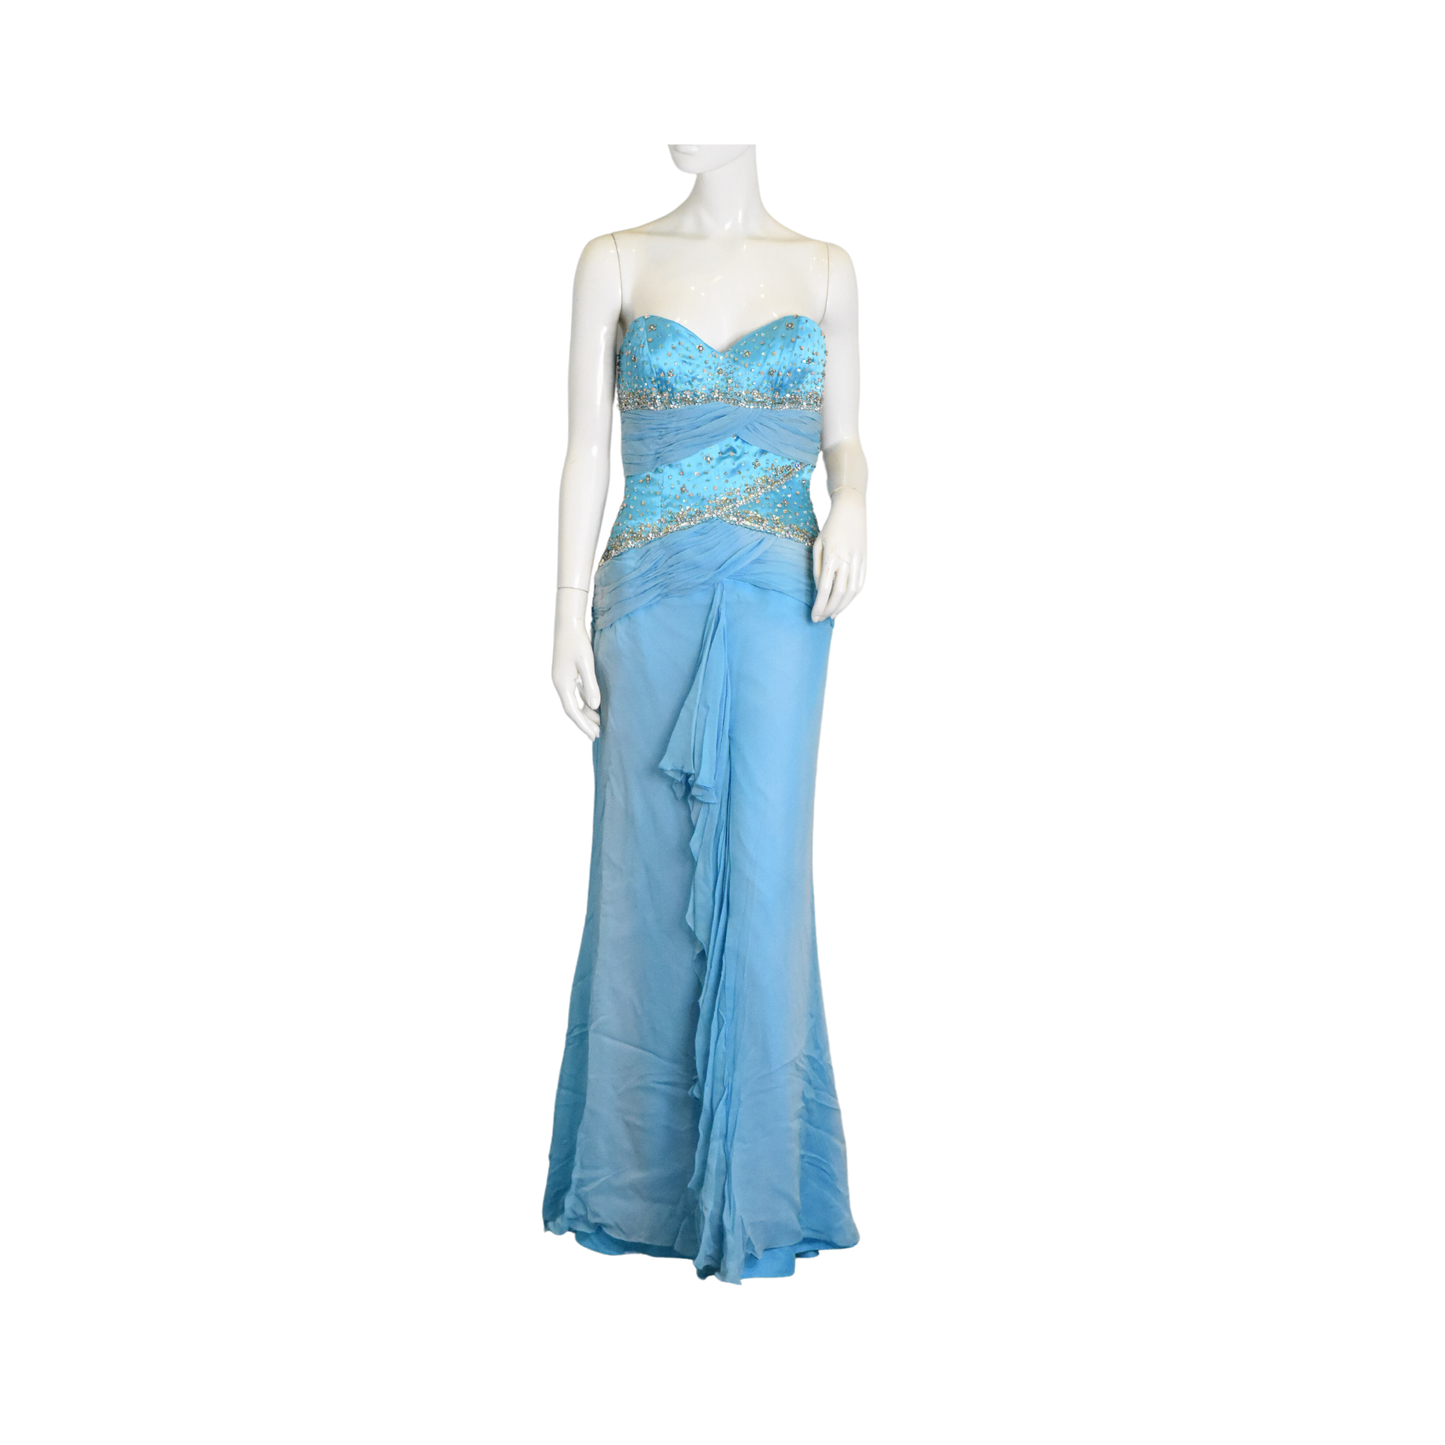 Tiffany Designs Gown Strapless Embellished Light Blue Size 12 SKU 000340-6